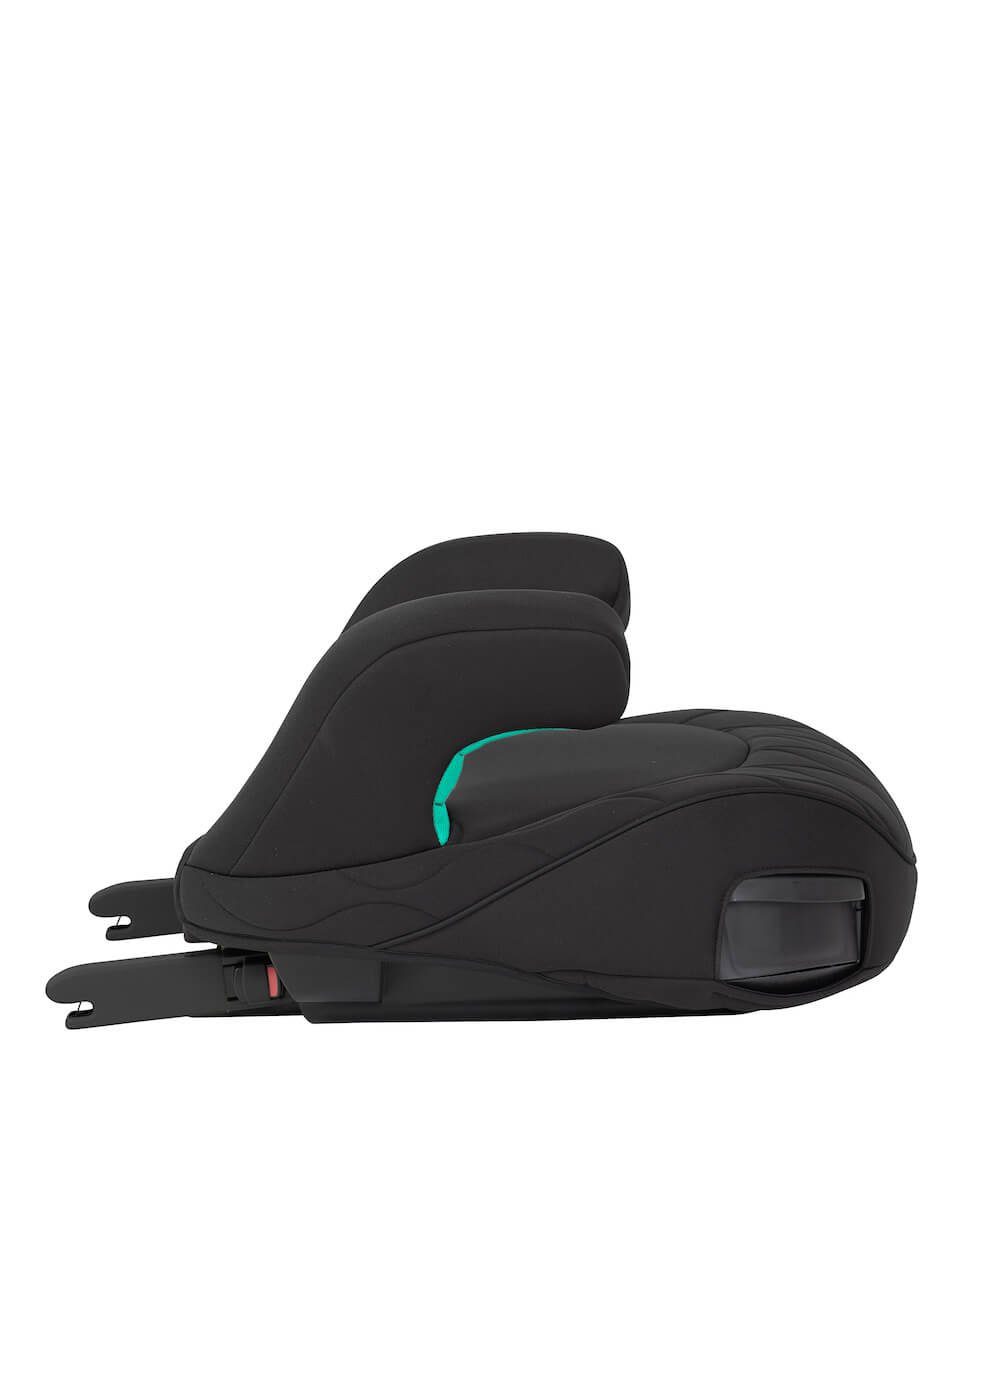 Graco - Graco Kindersitzerhöhung Booster Autokindersitz Max Midnight - R129 Farbe: